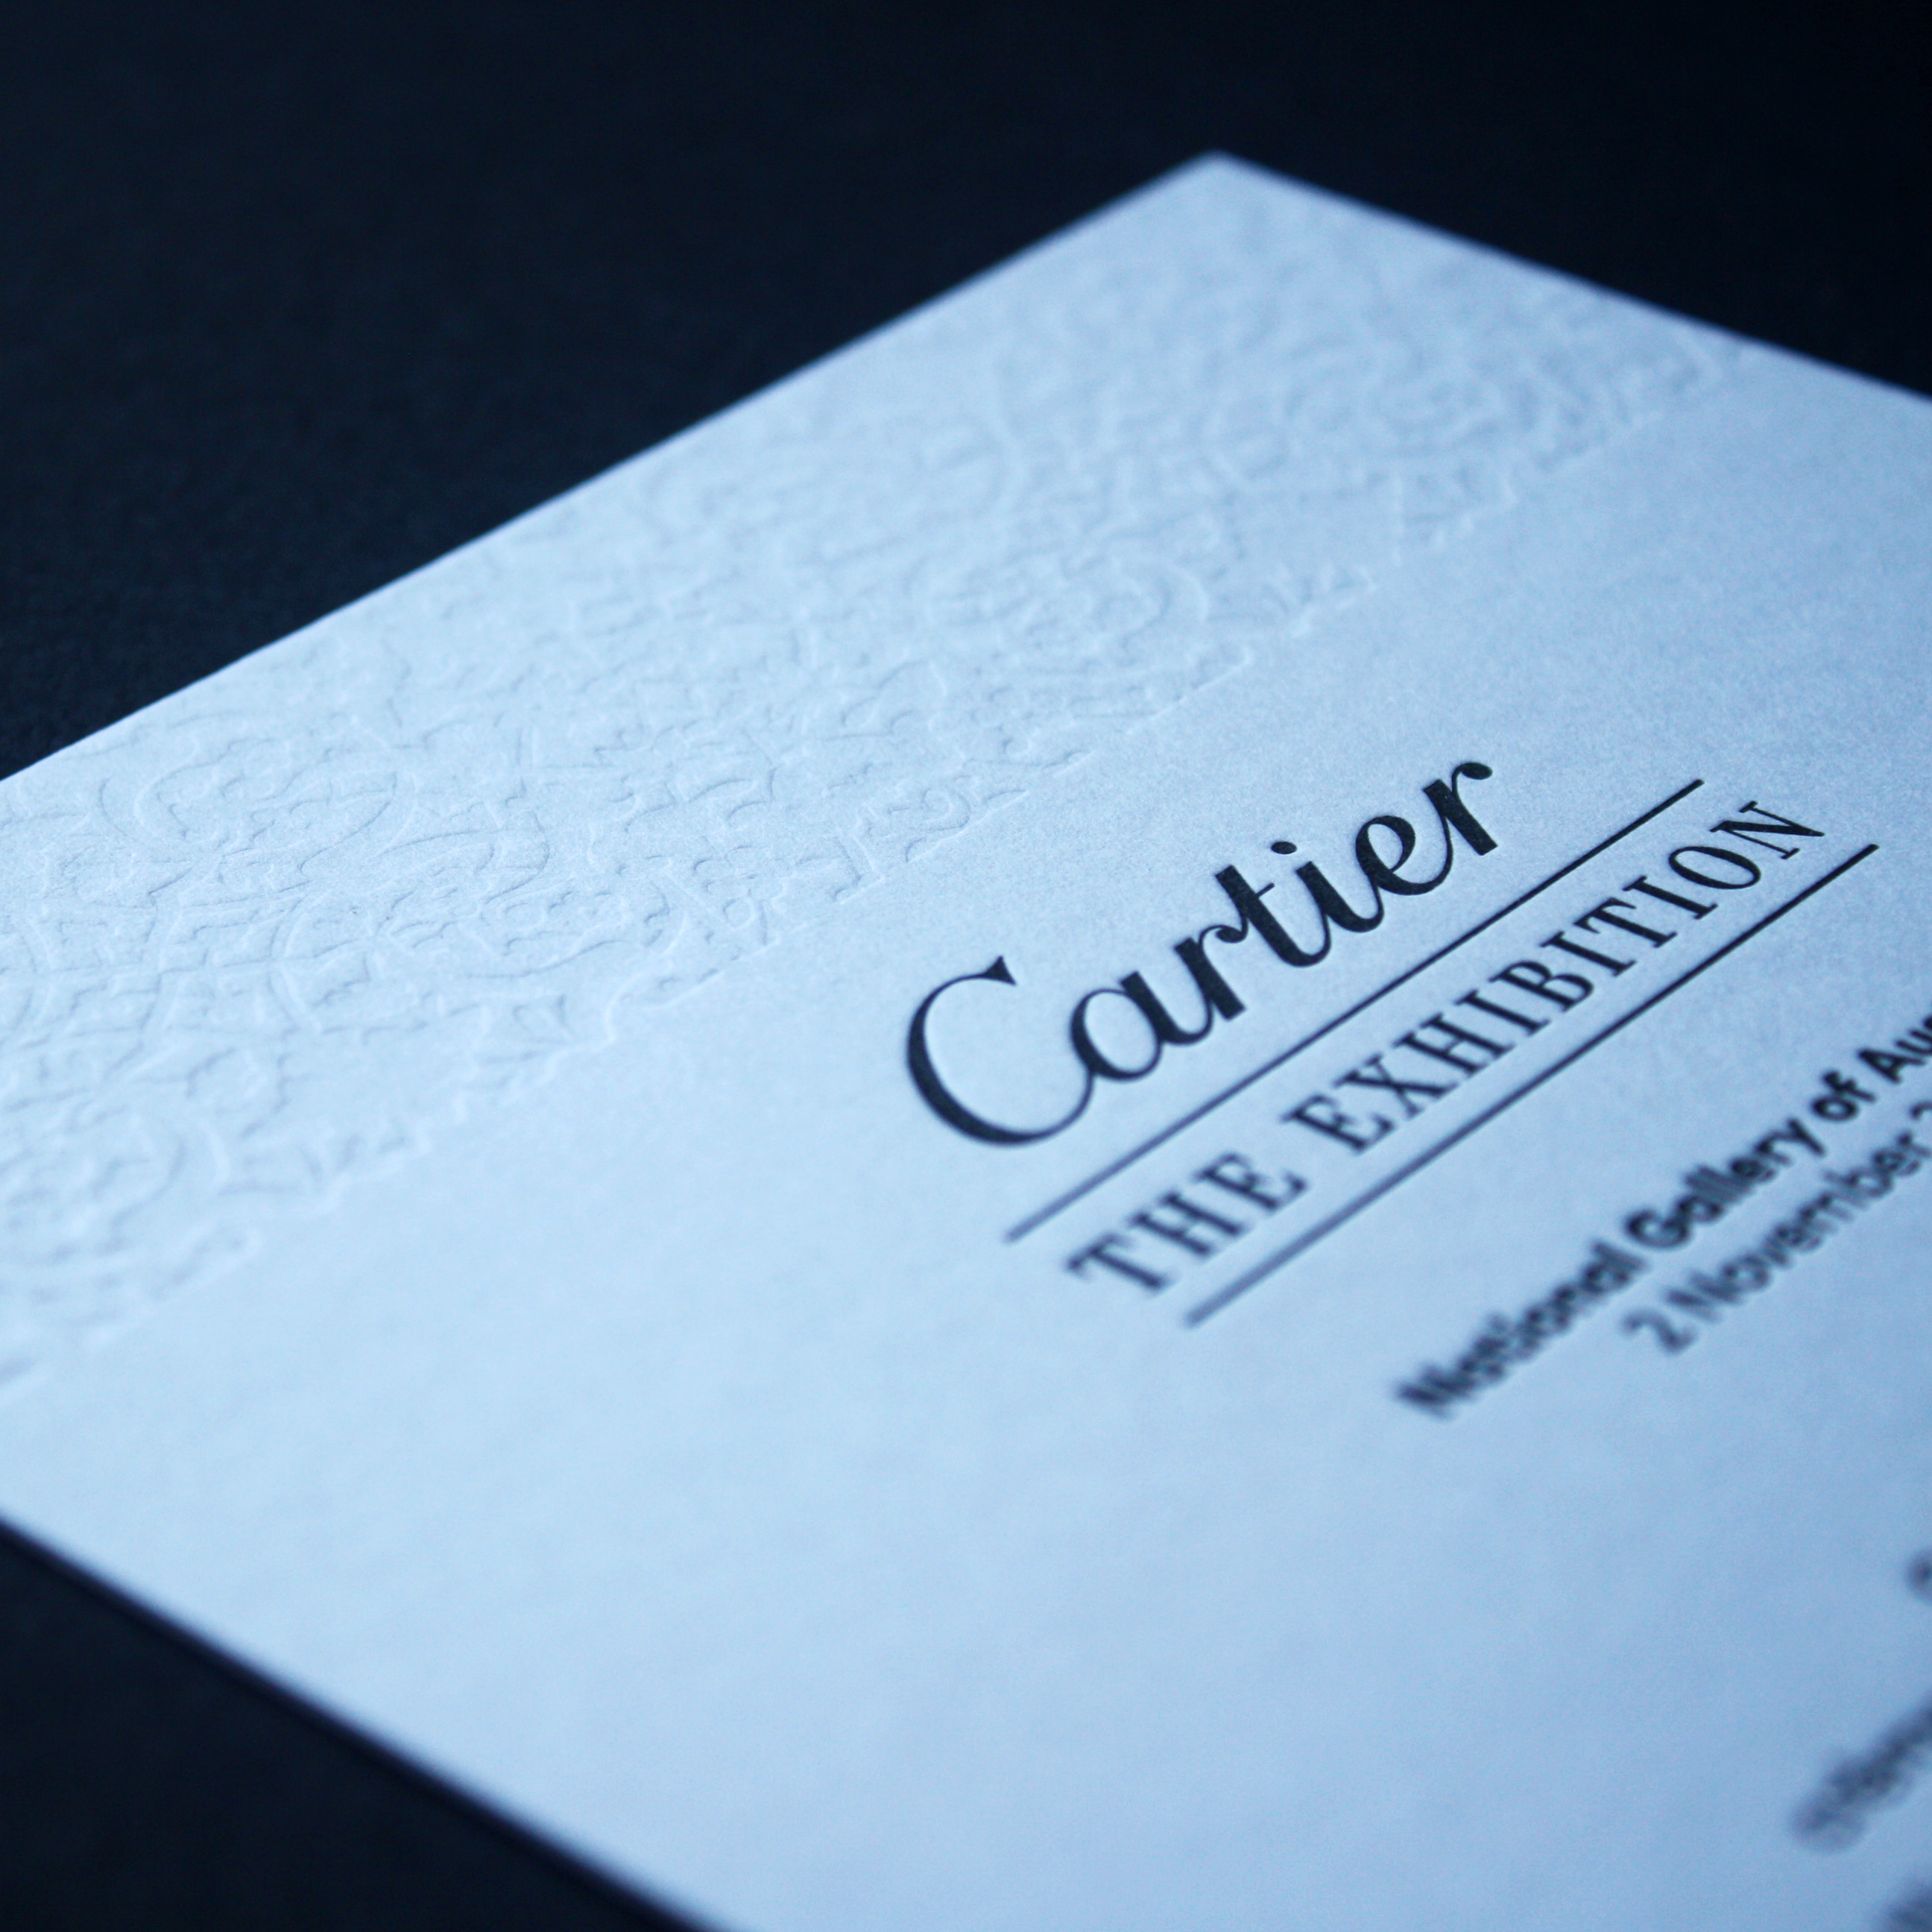 Cartier event stationery